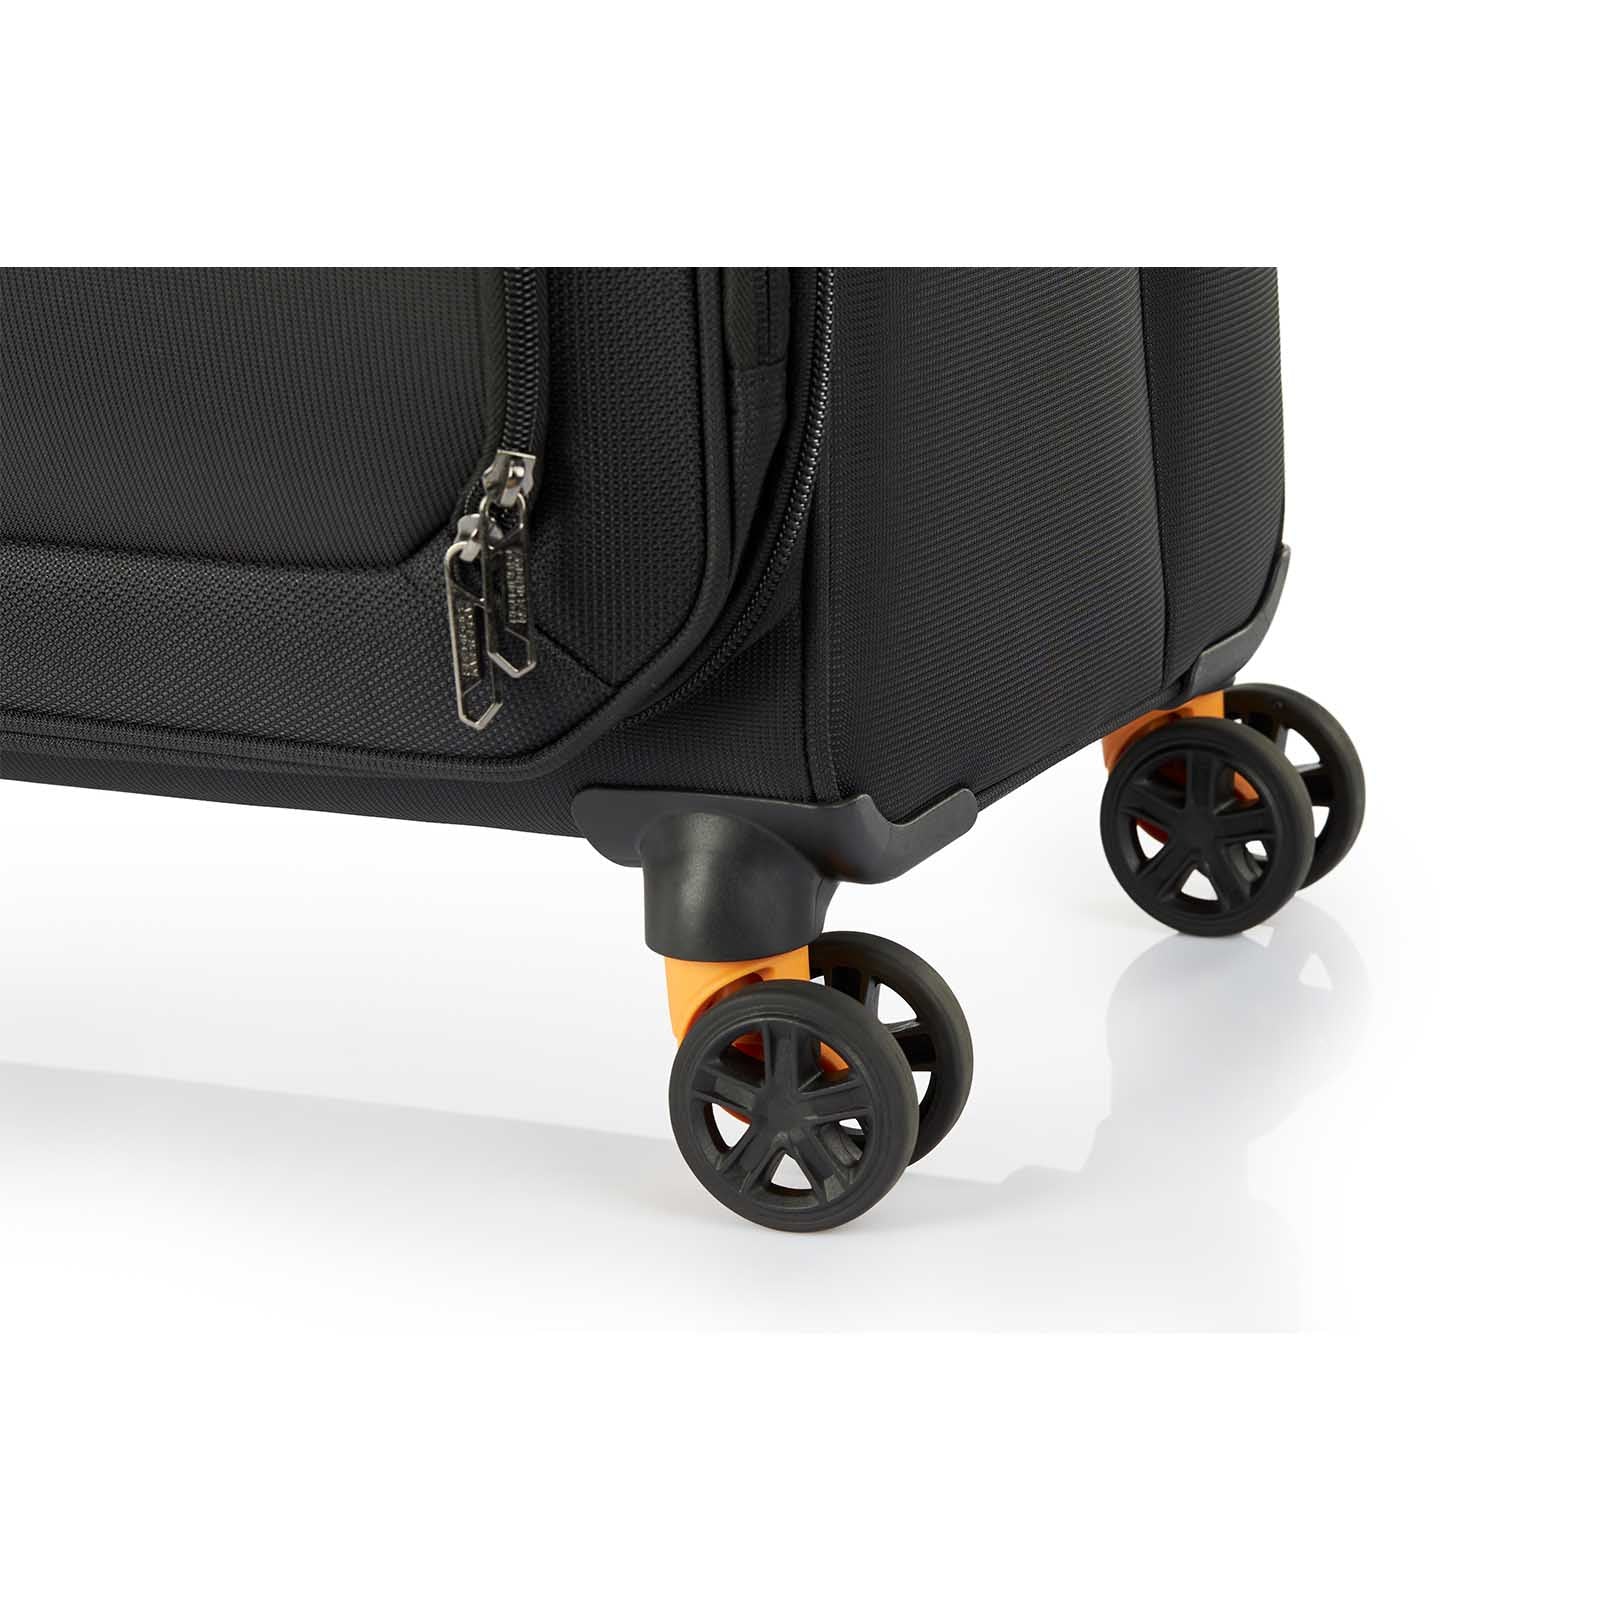 American-Tourister-Applite-4-Eco-82cm-Suitcase-Black-Mustard-Wheels